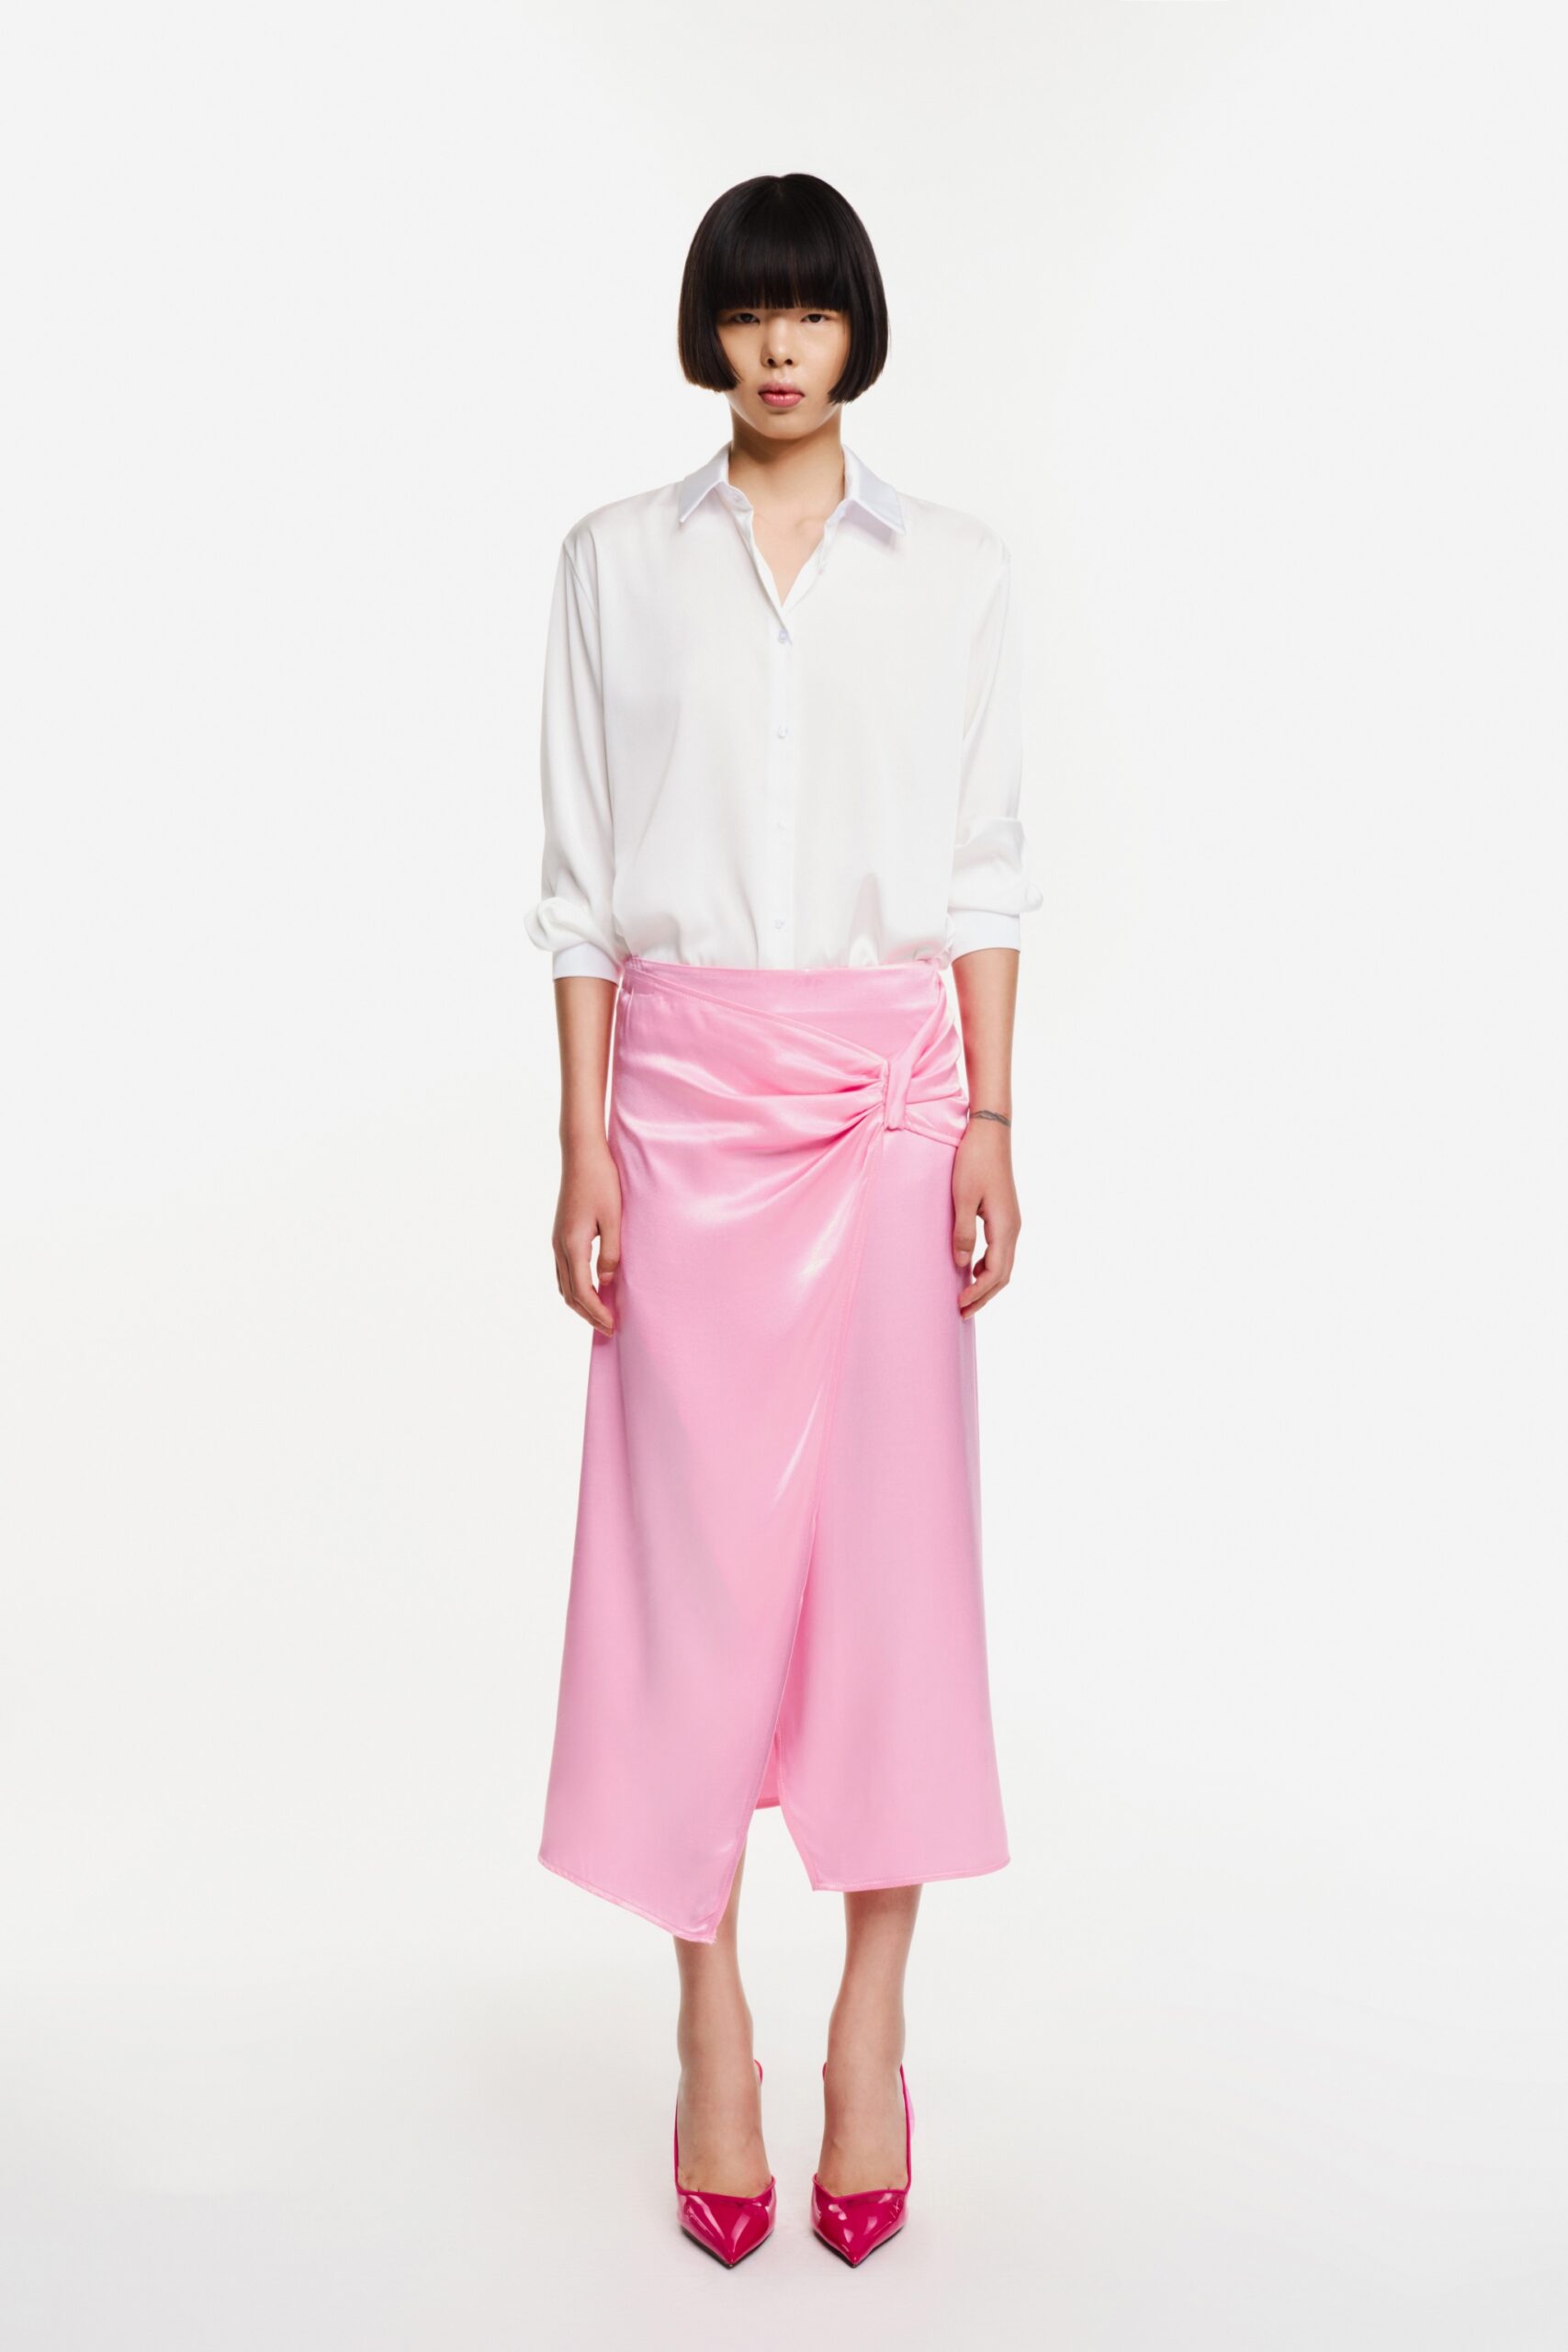 Topshop Petite satin bias maxi skirt in pink  ASOS